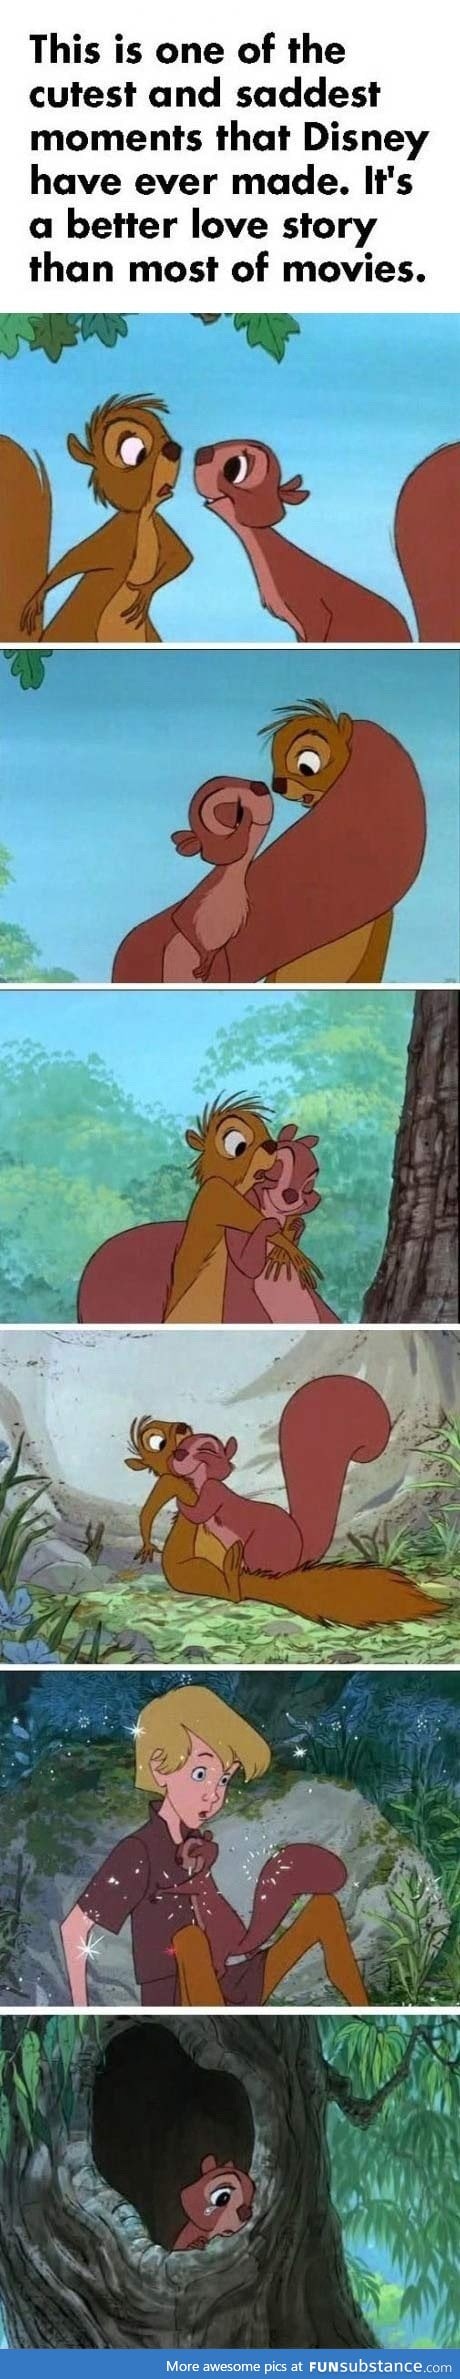 Saddest Disney love story